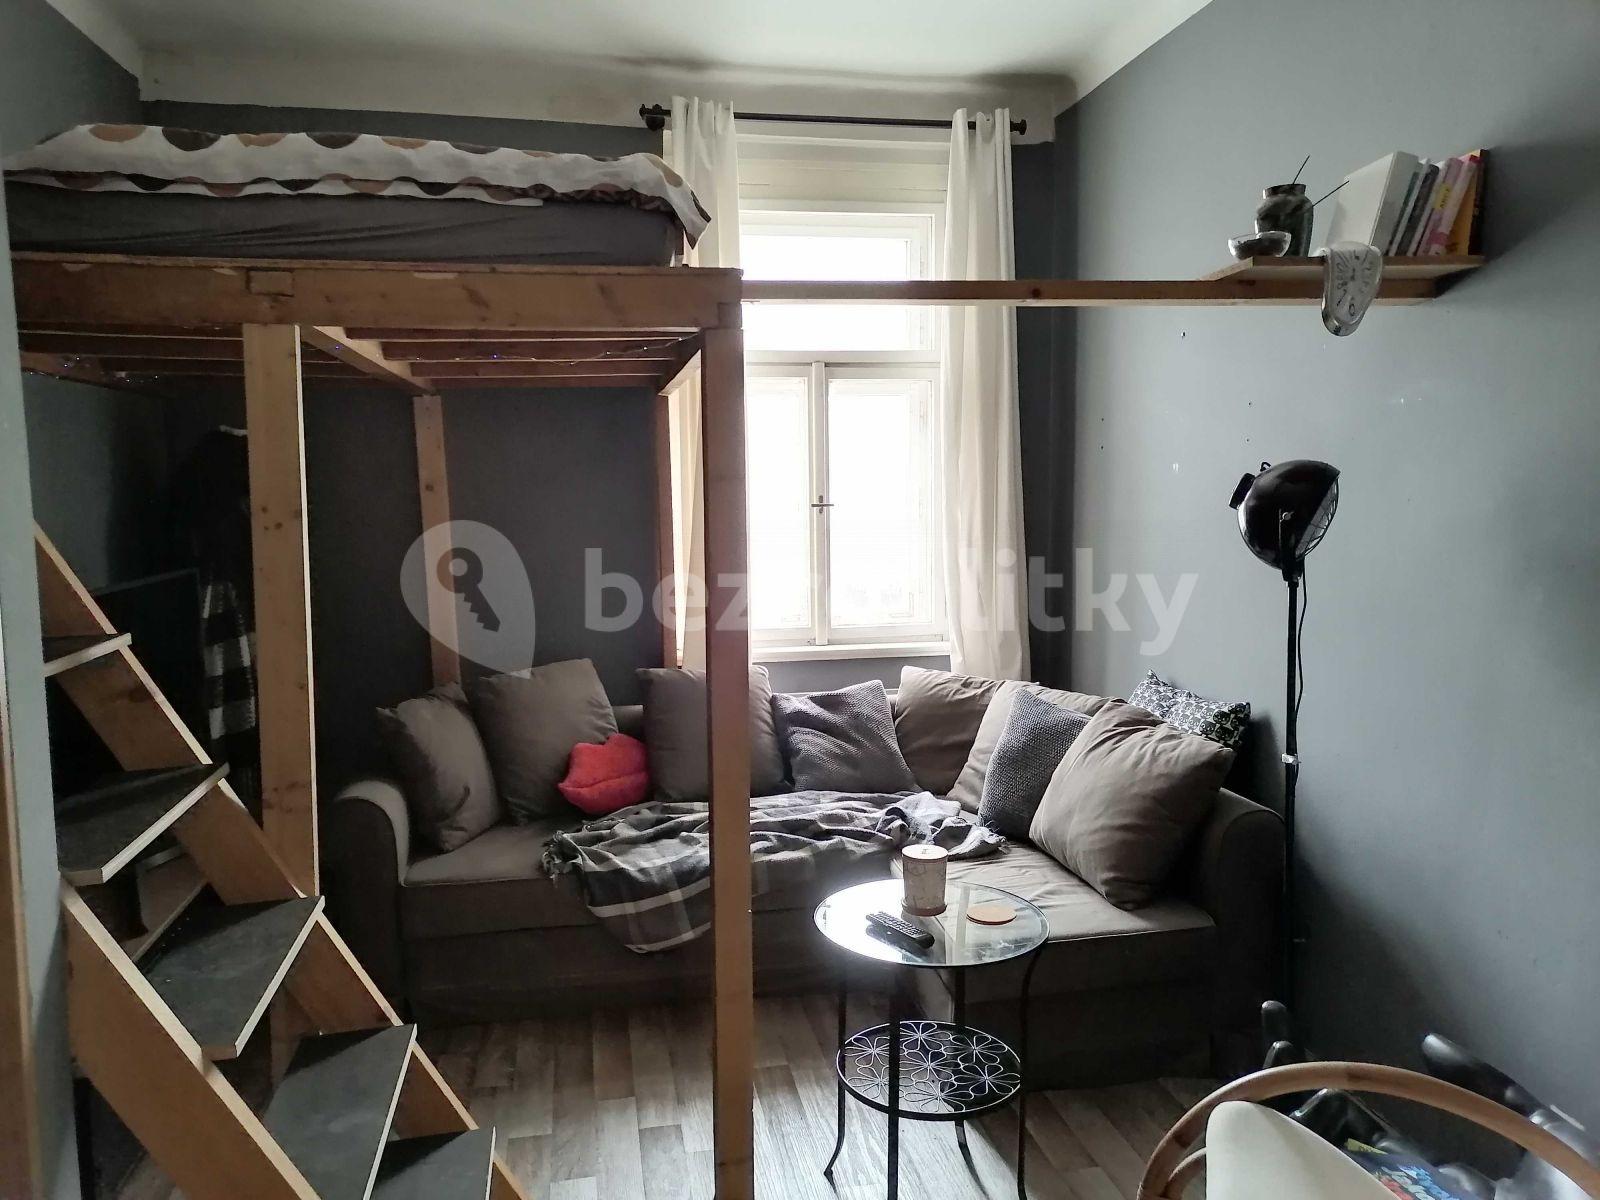 1 bedroom flat to rent, 35 m², Cimburkova, Prague, Prague